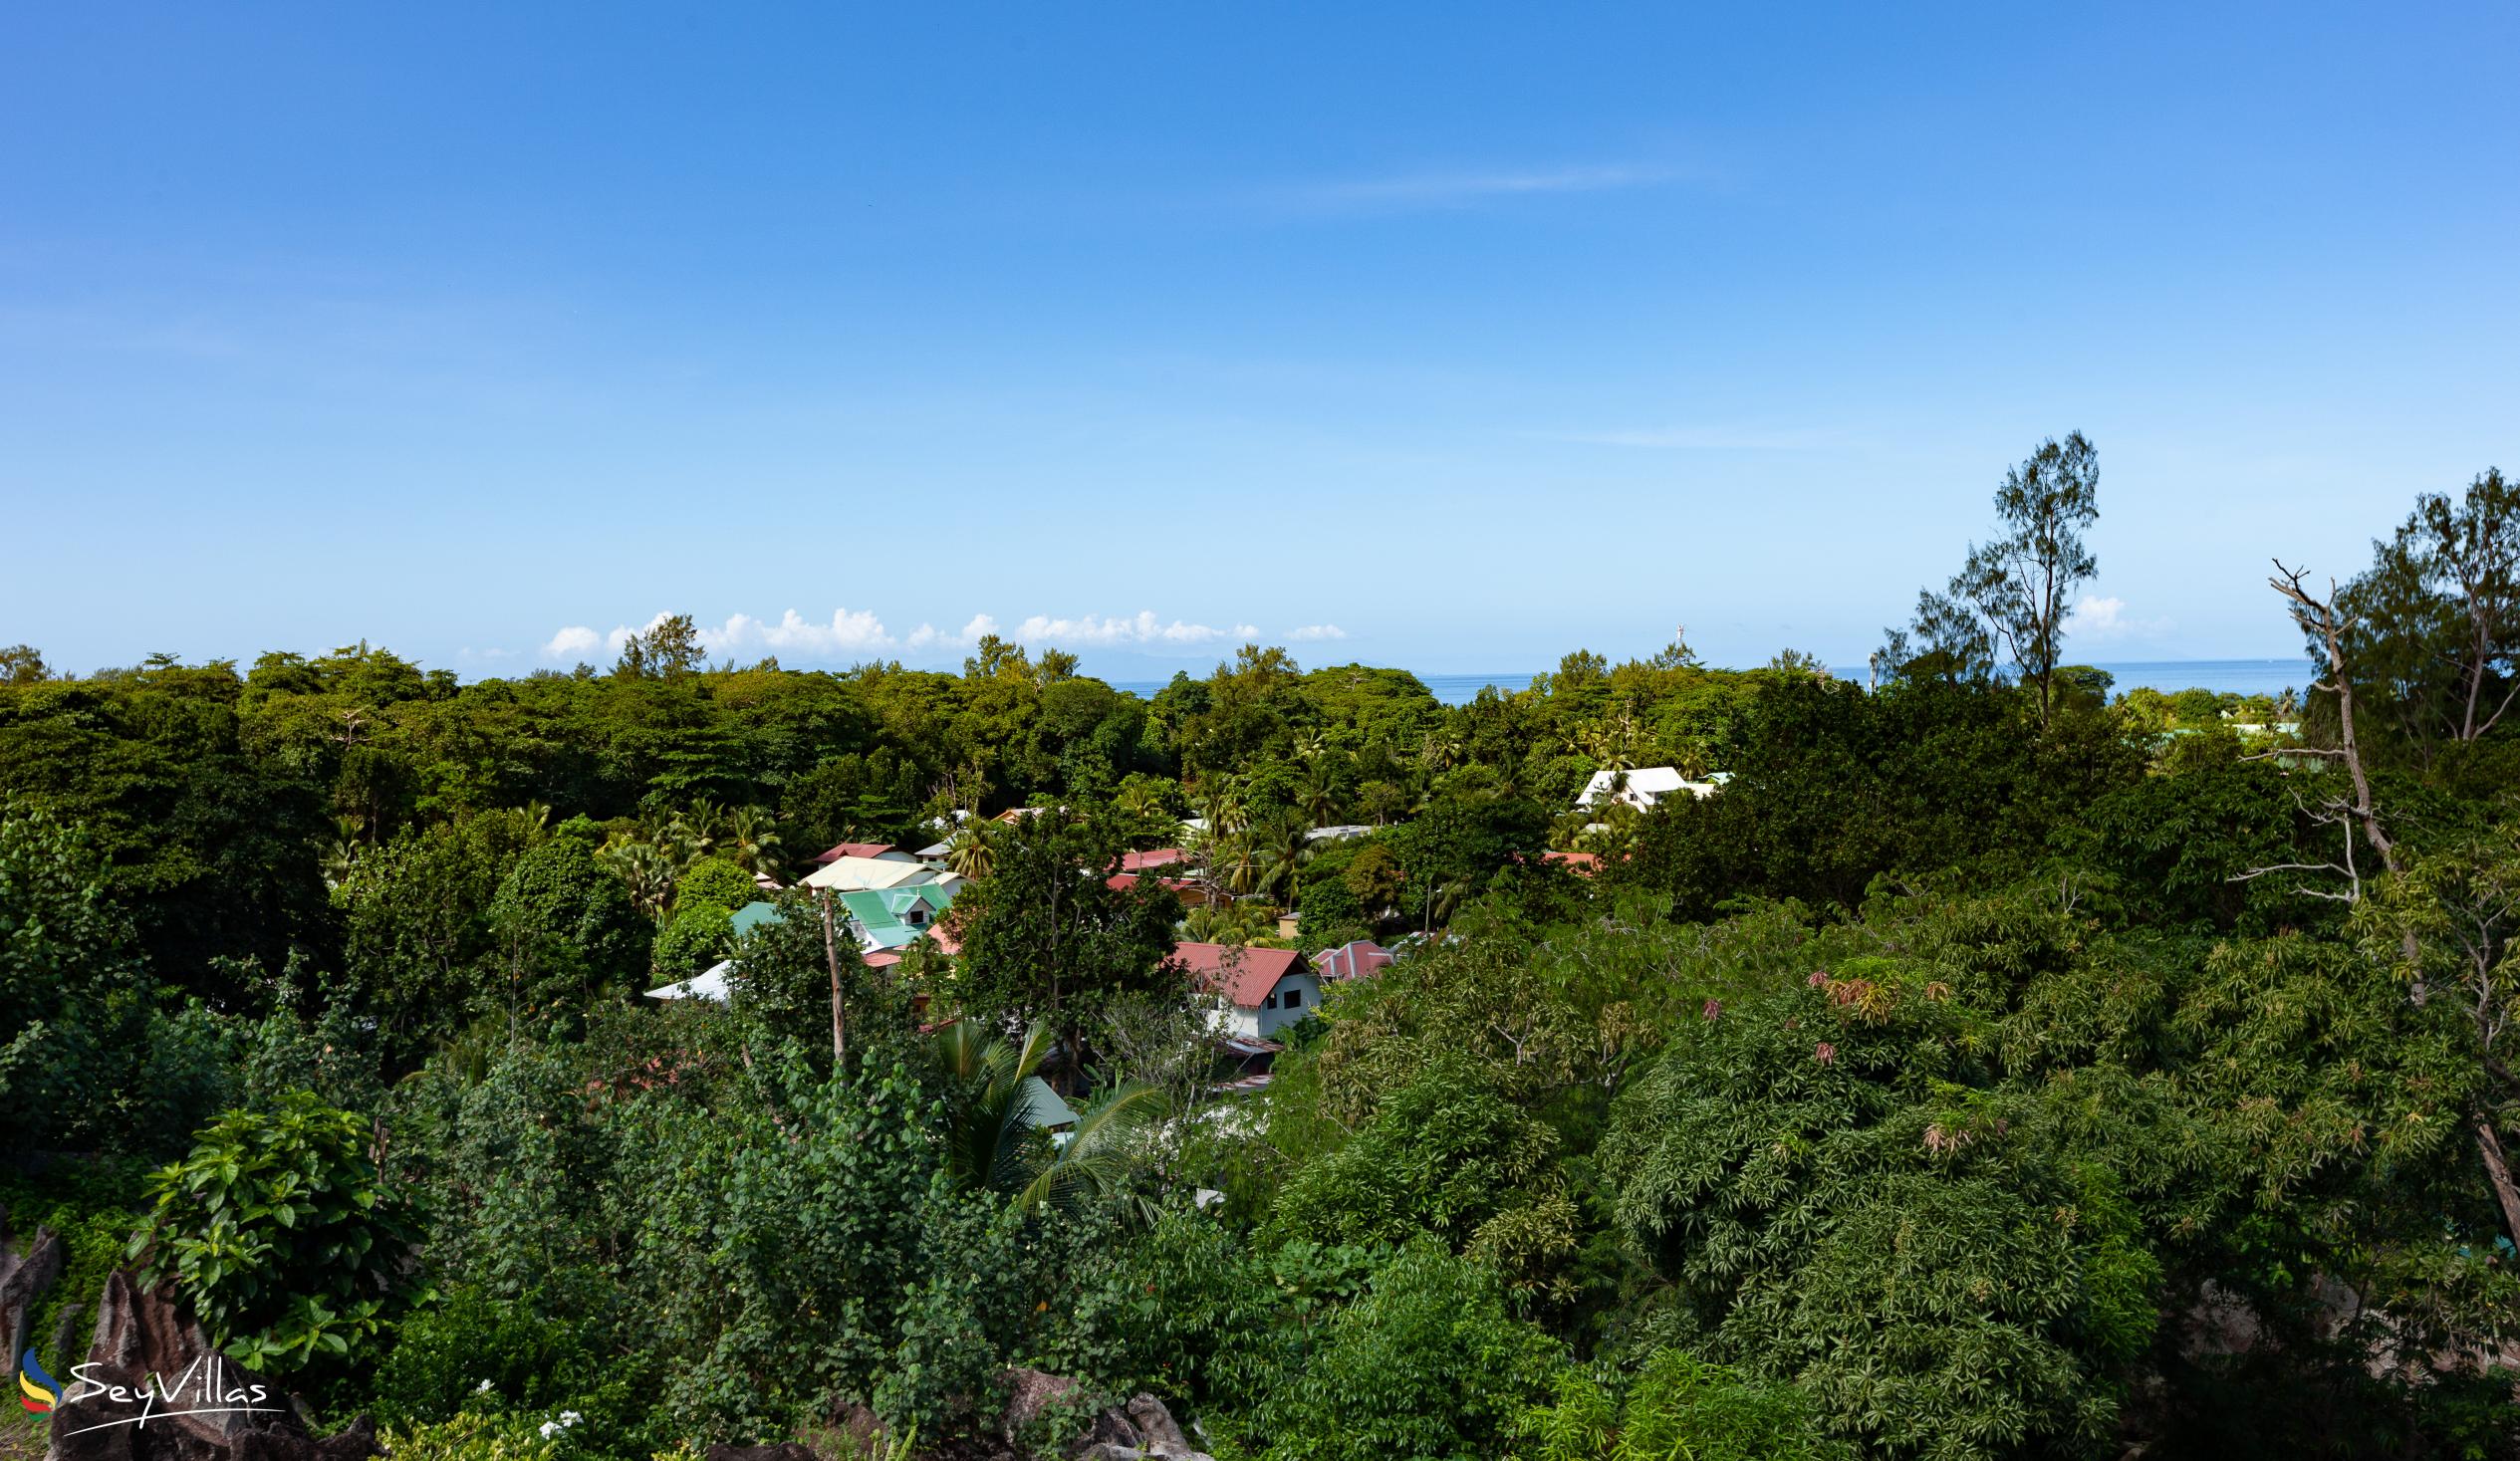 Foto 8: Villa Hortensia - Lage - La Digue (Seychellen)